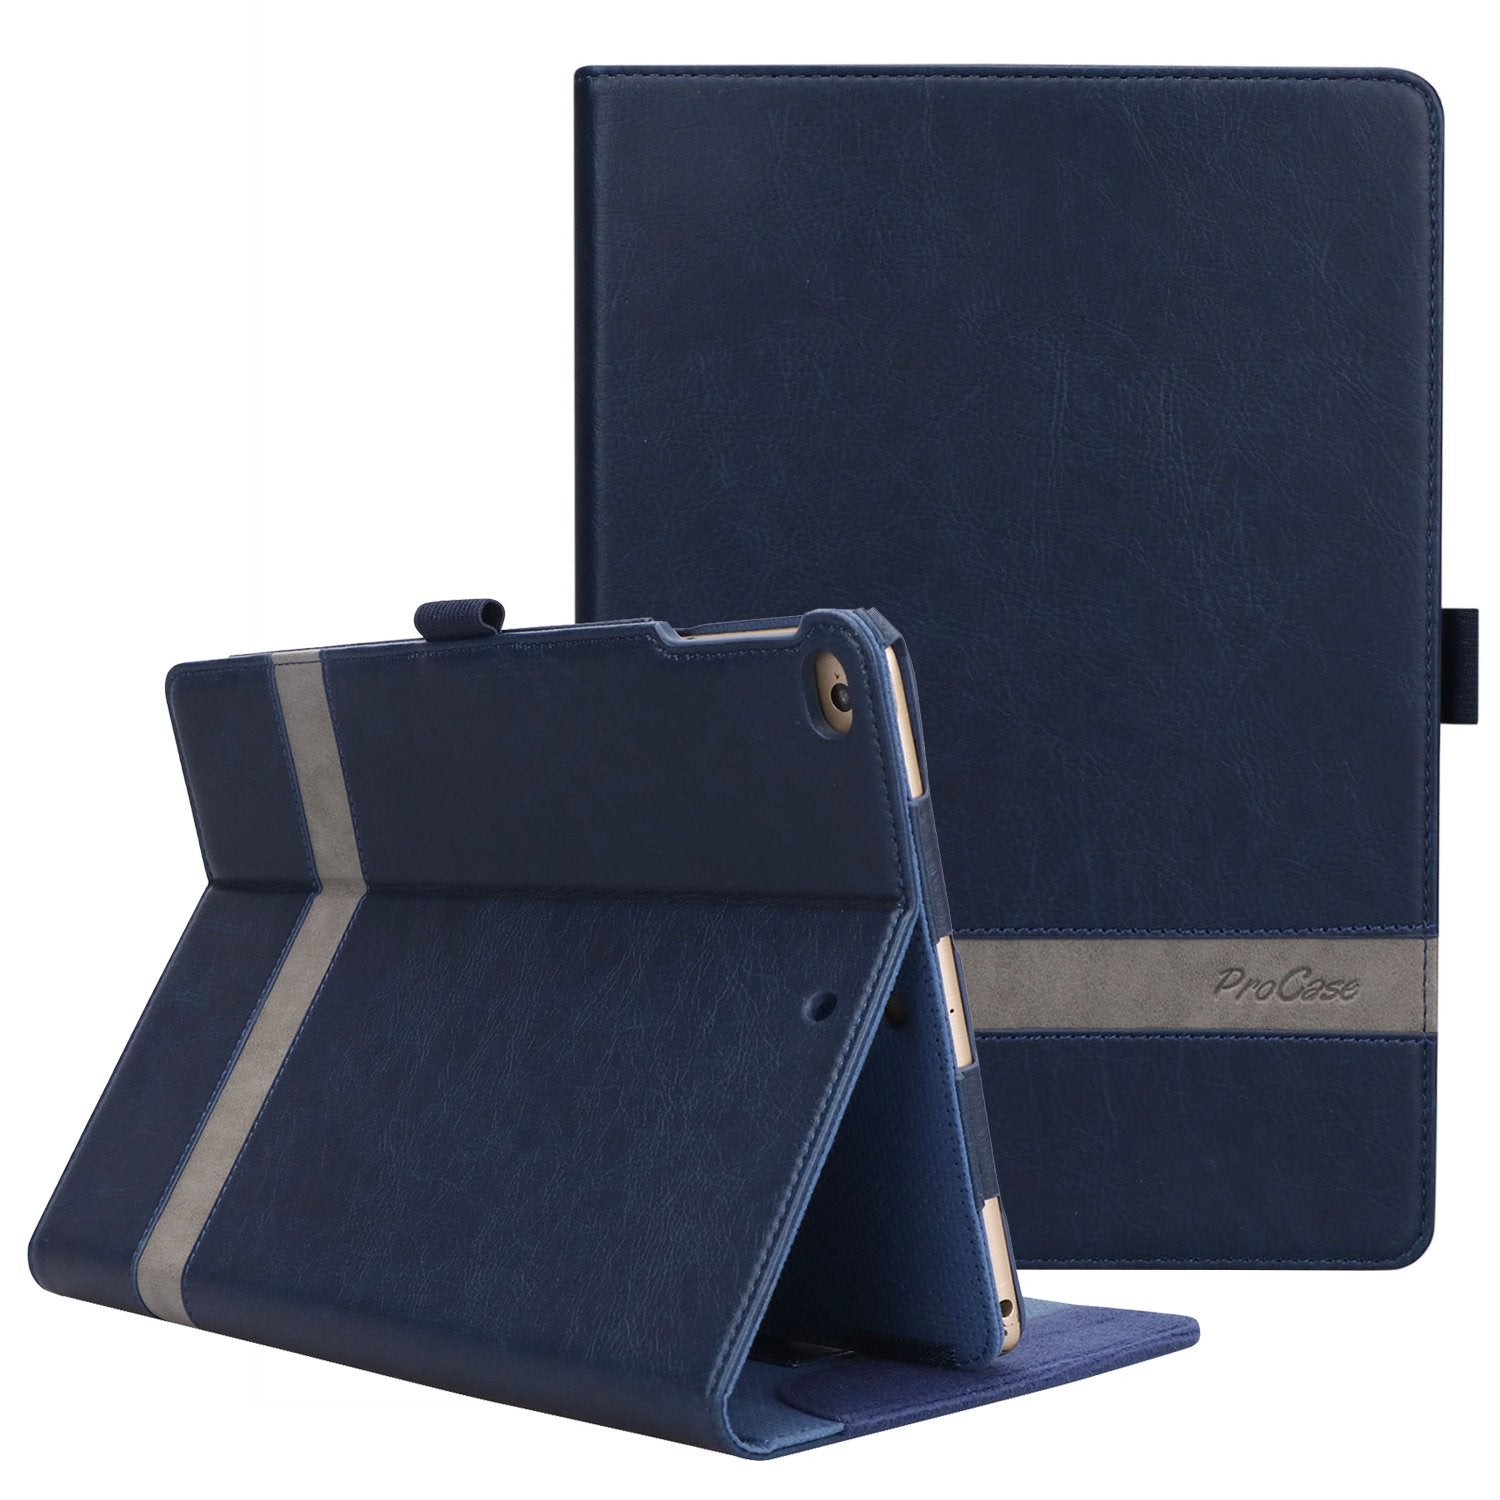 iPad 9.7 2018/2017 Leather Folio Case | ProCase navy